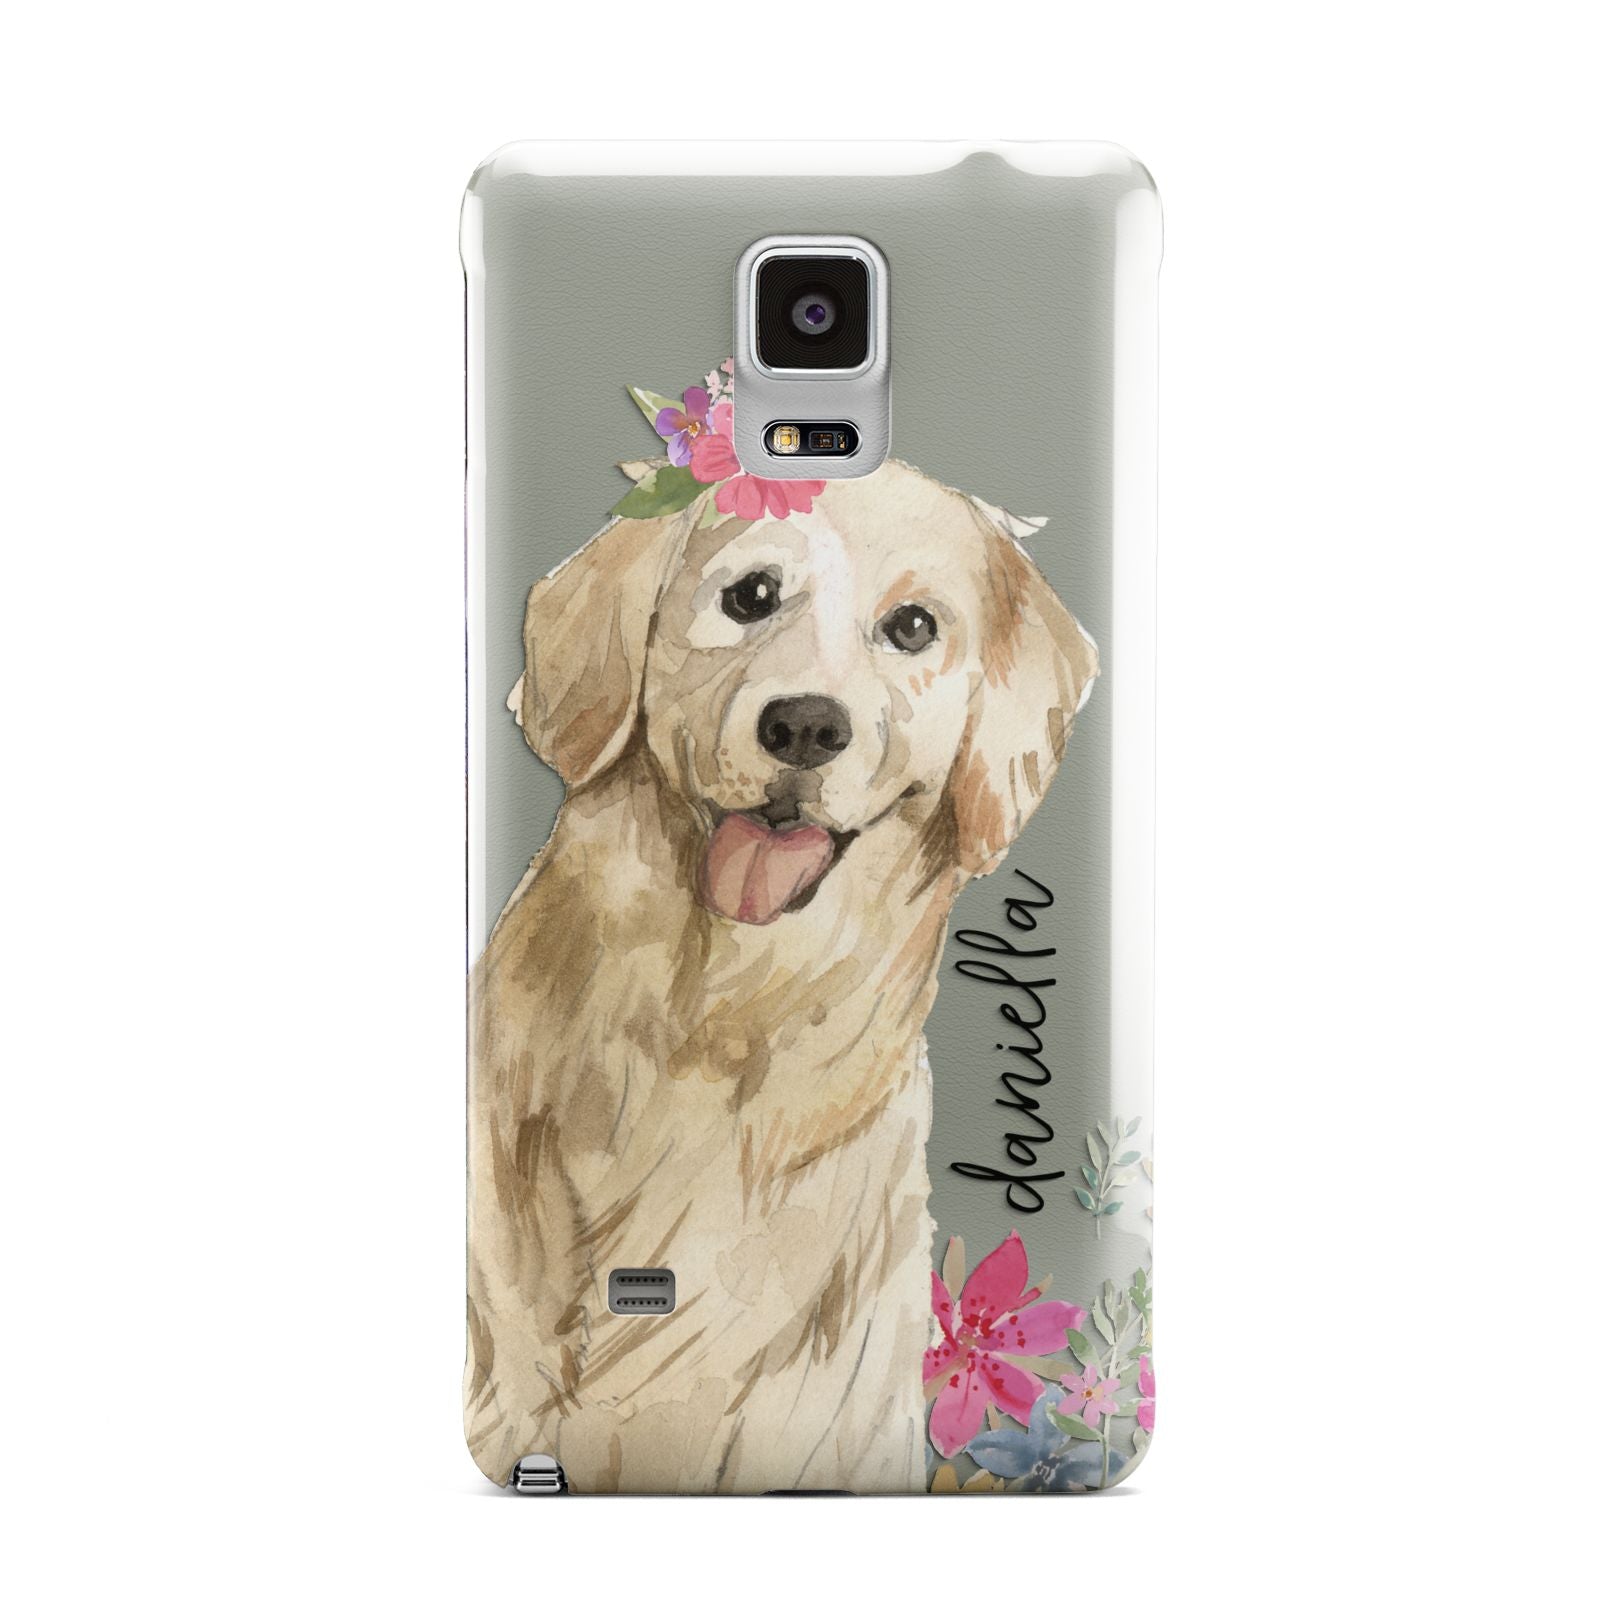 Personalised Golden Retriever Dog Samsung Galaxy Note 4 Case